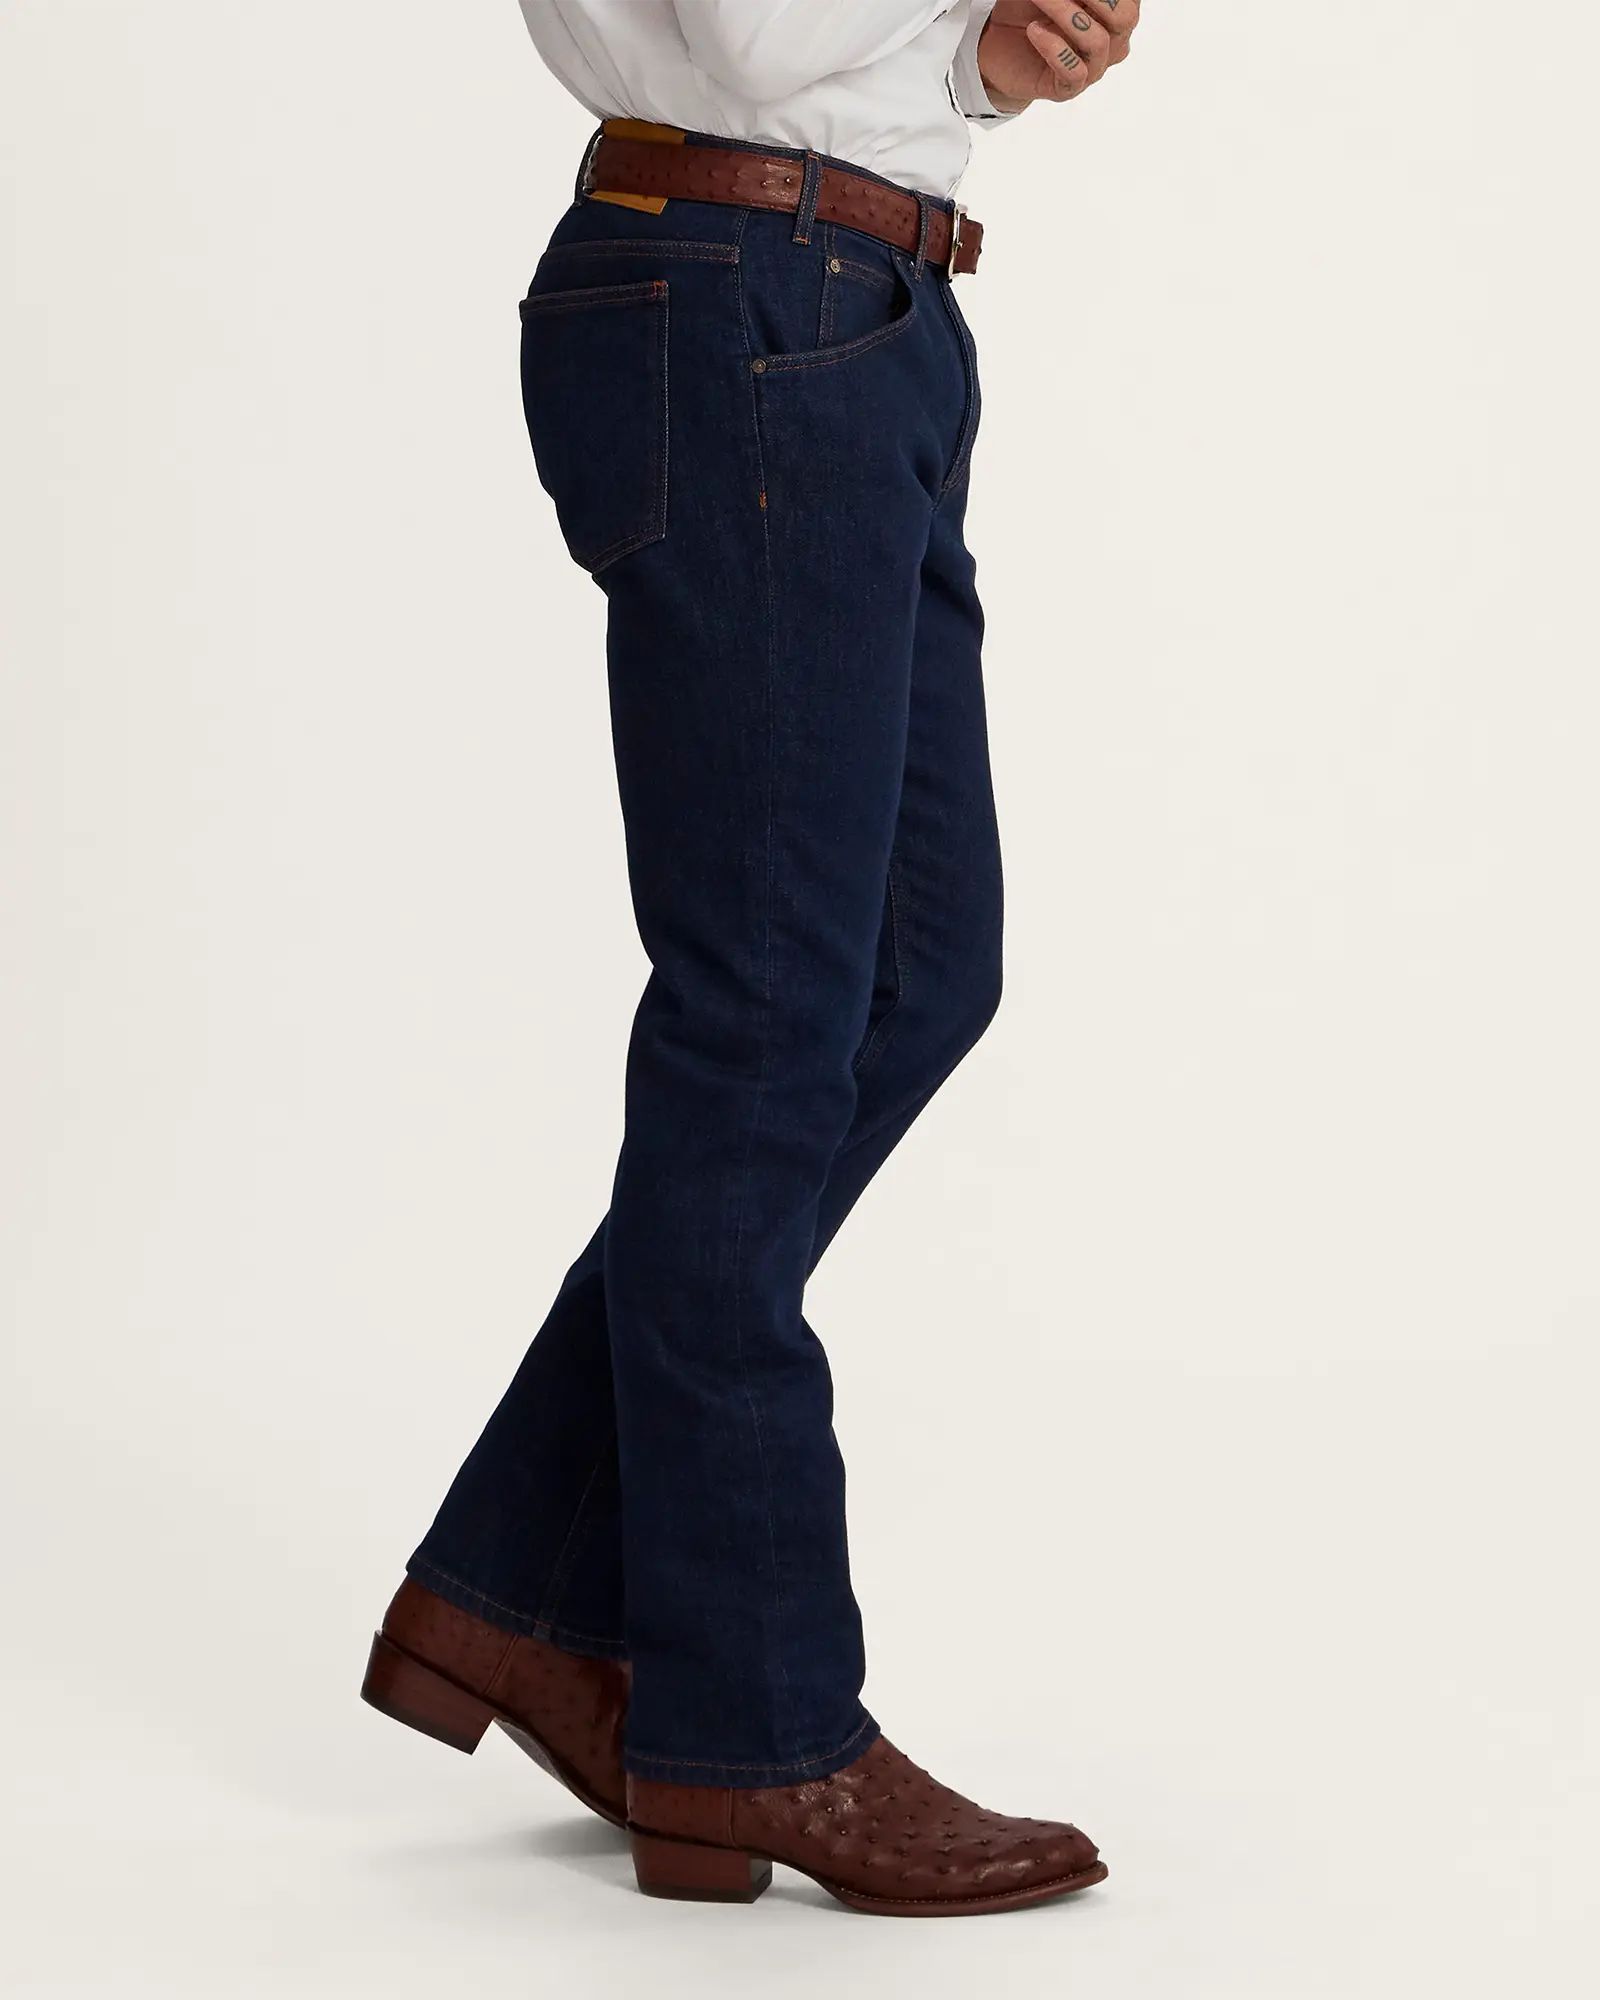 Men's Rugged Standard Jeans - Dark | Tecovas | Tecovas